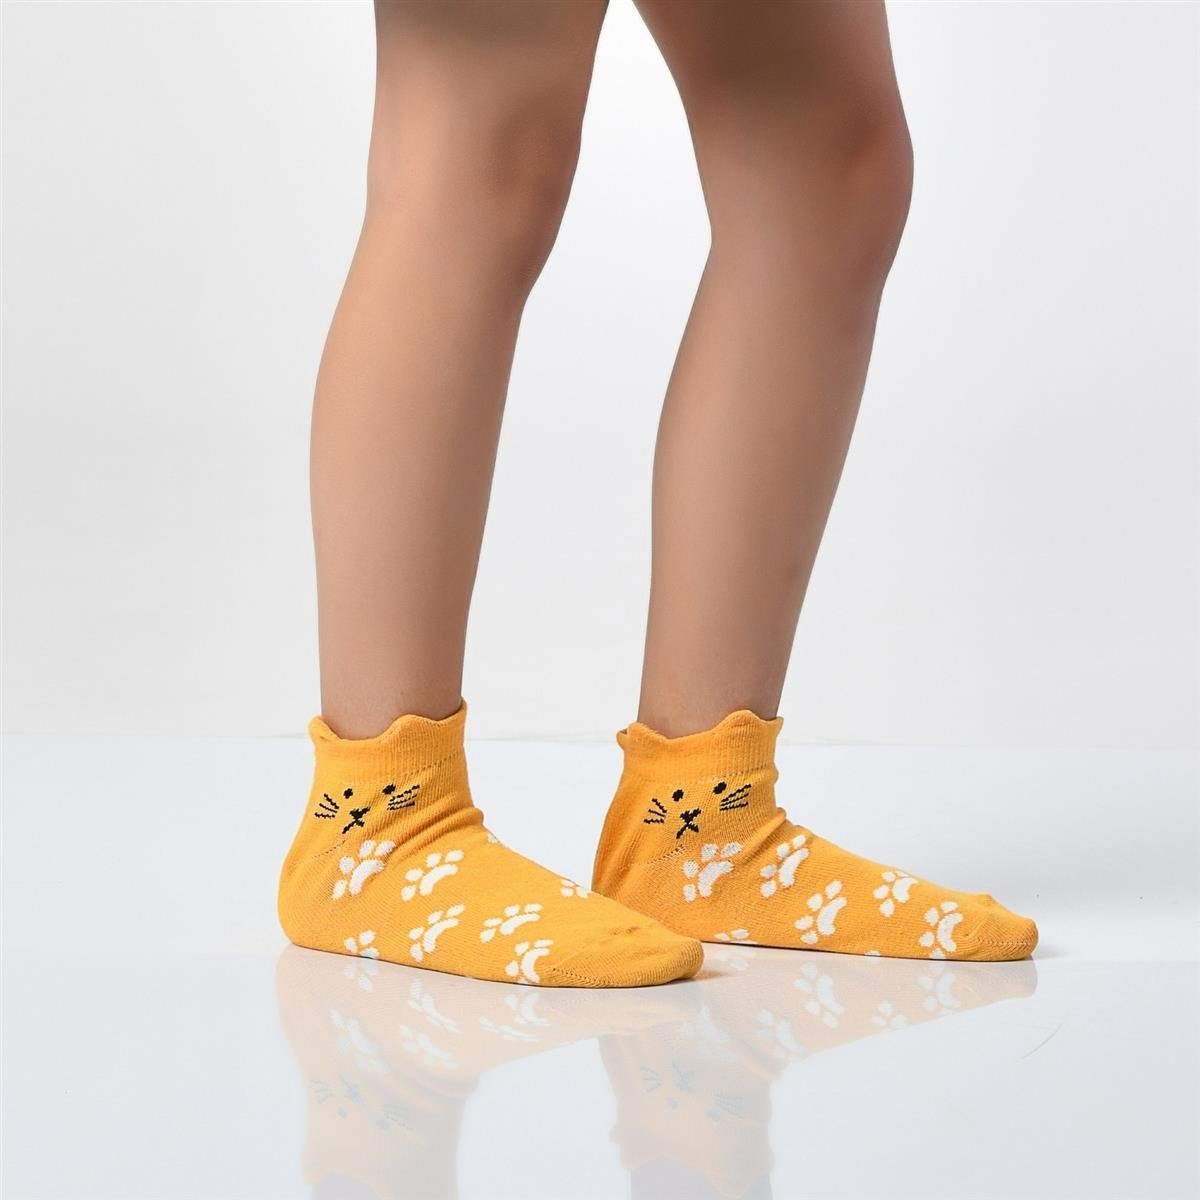 Wäsche/Bademode Socken LOREZA Kurzsocken 12 Paar Mädchen Socken Sneakersocken Kindersocken (Paar, 12-Paar, 12 Paar) 12-Paar